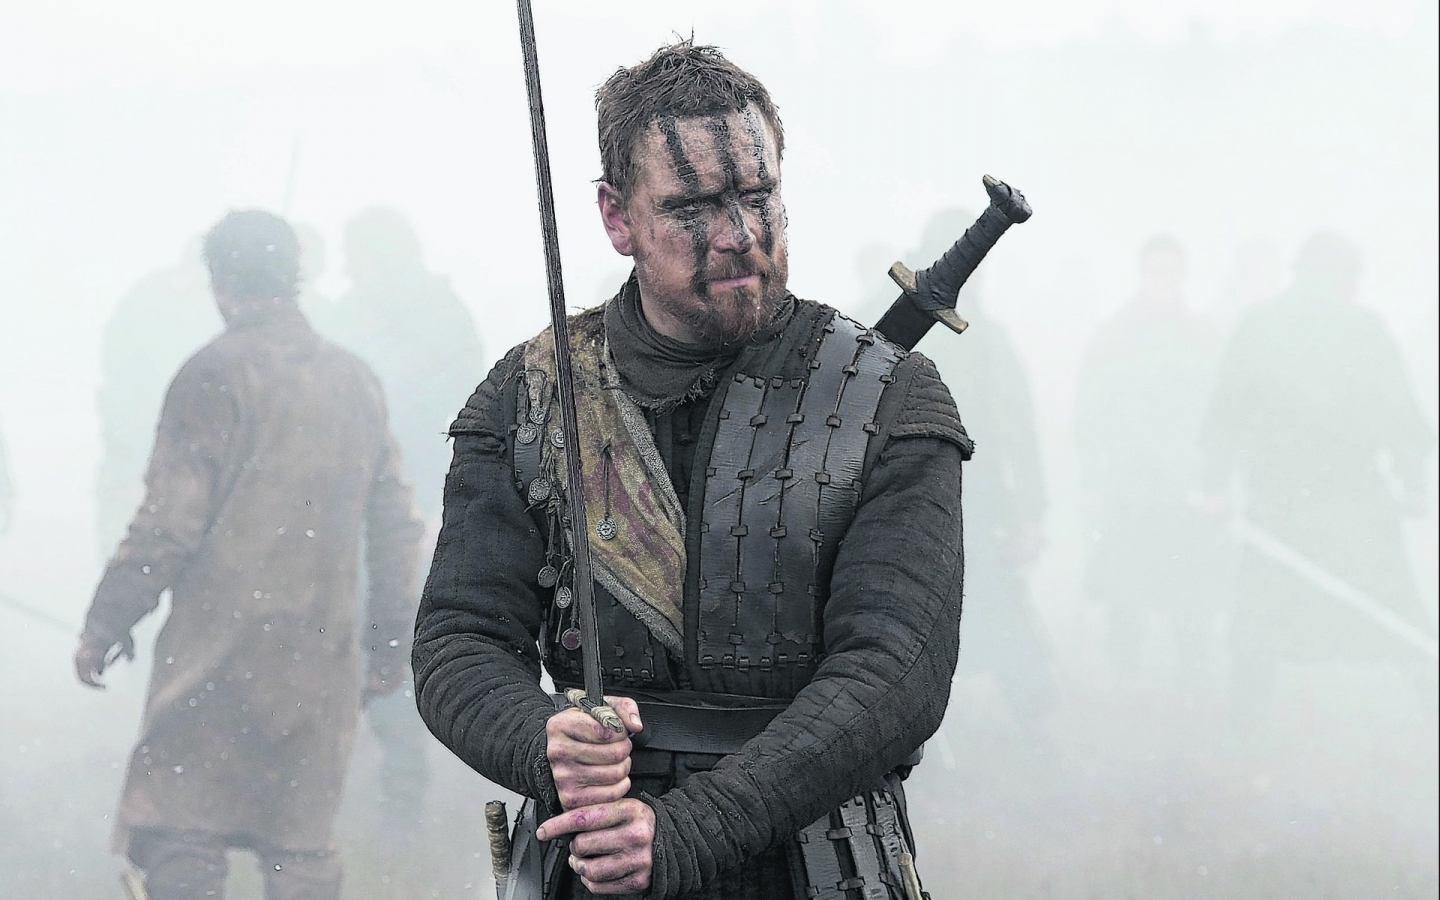 Macbeth in Battle for 1440 x 900 widescreen resolution